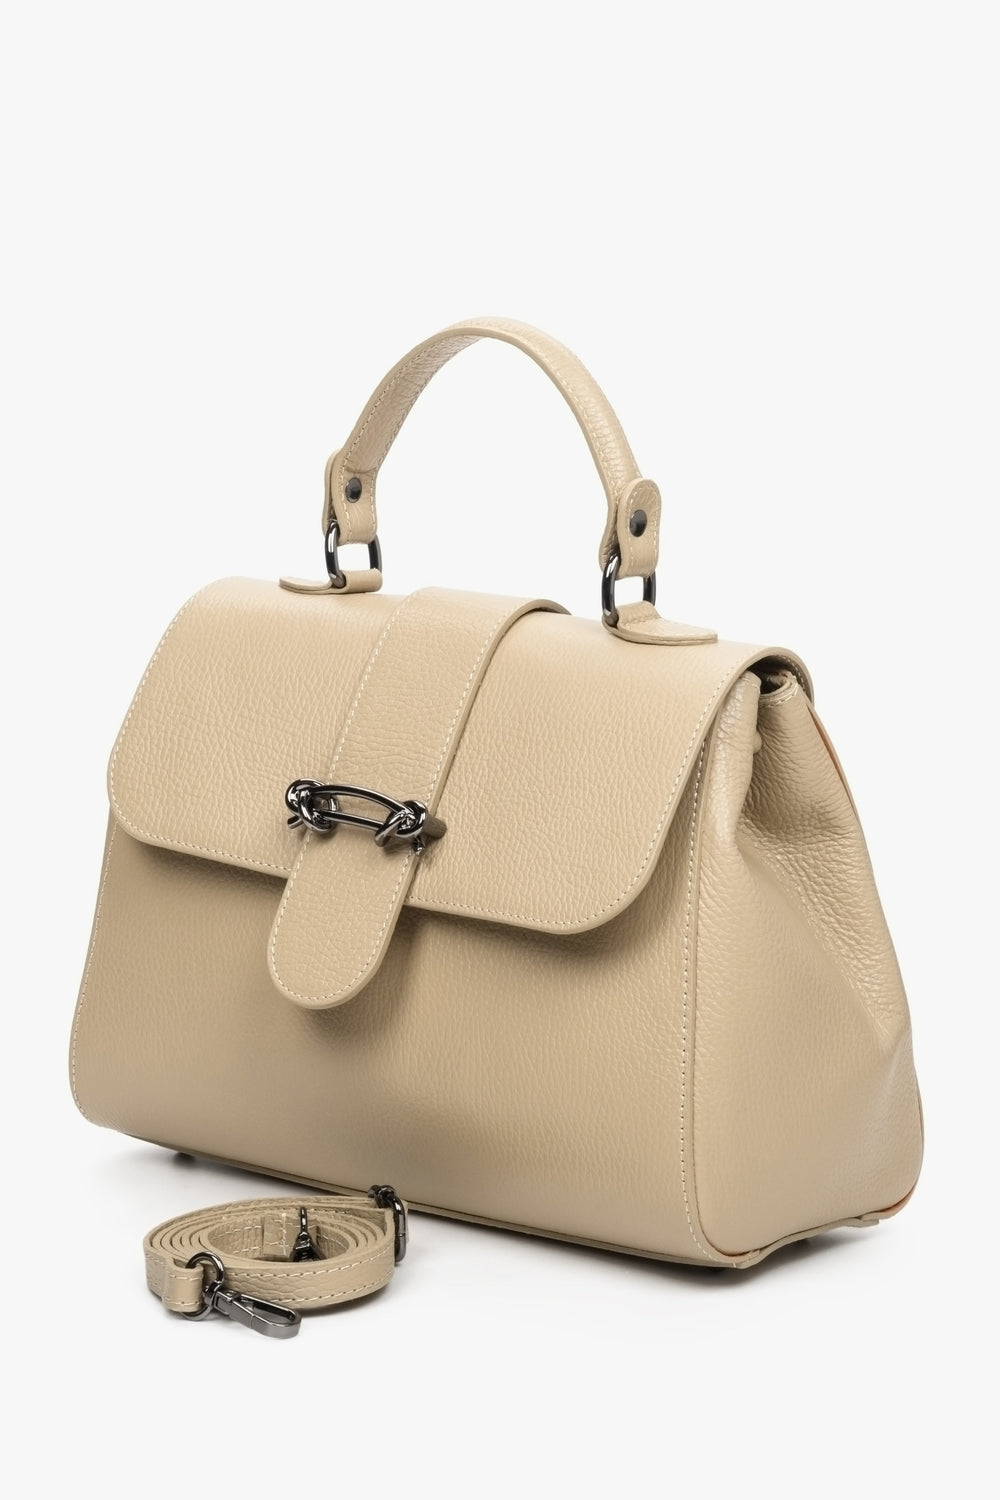 Sand Beige Italian Leather Women's Handbag Estro ER00112905